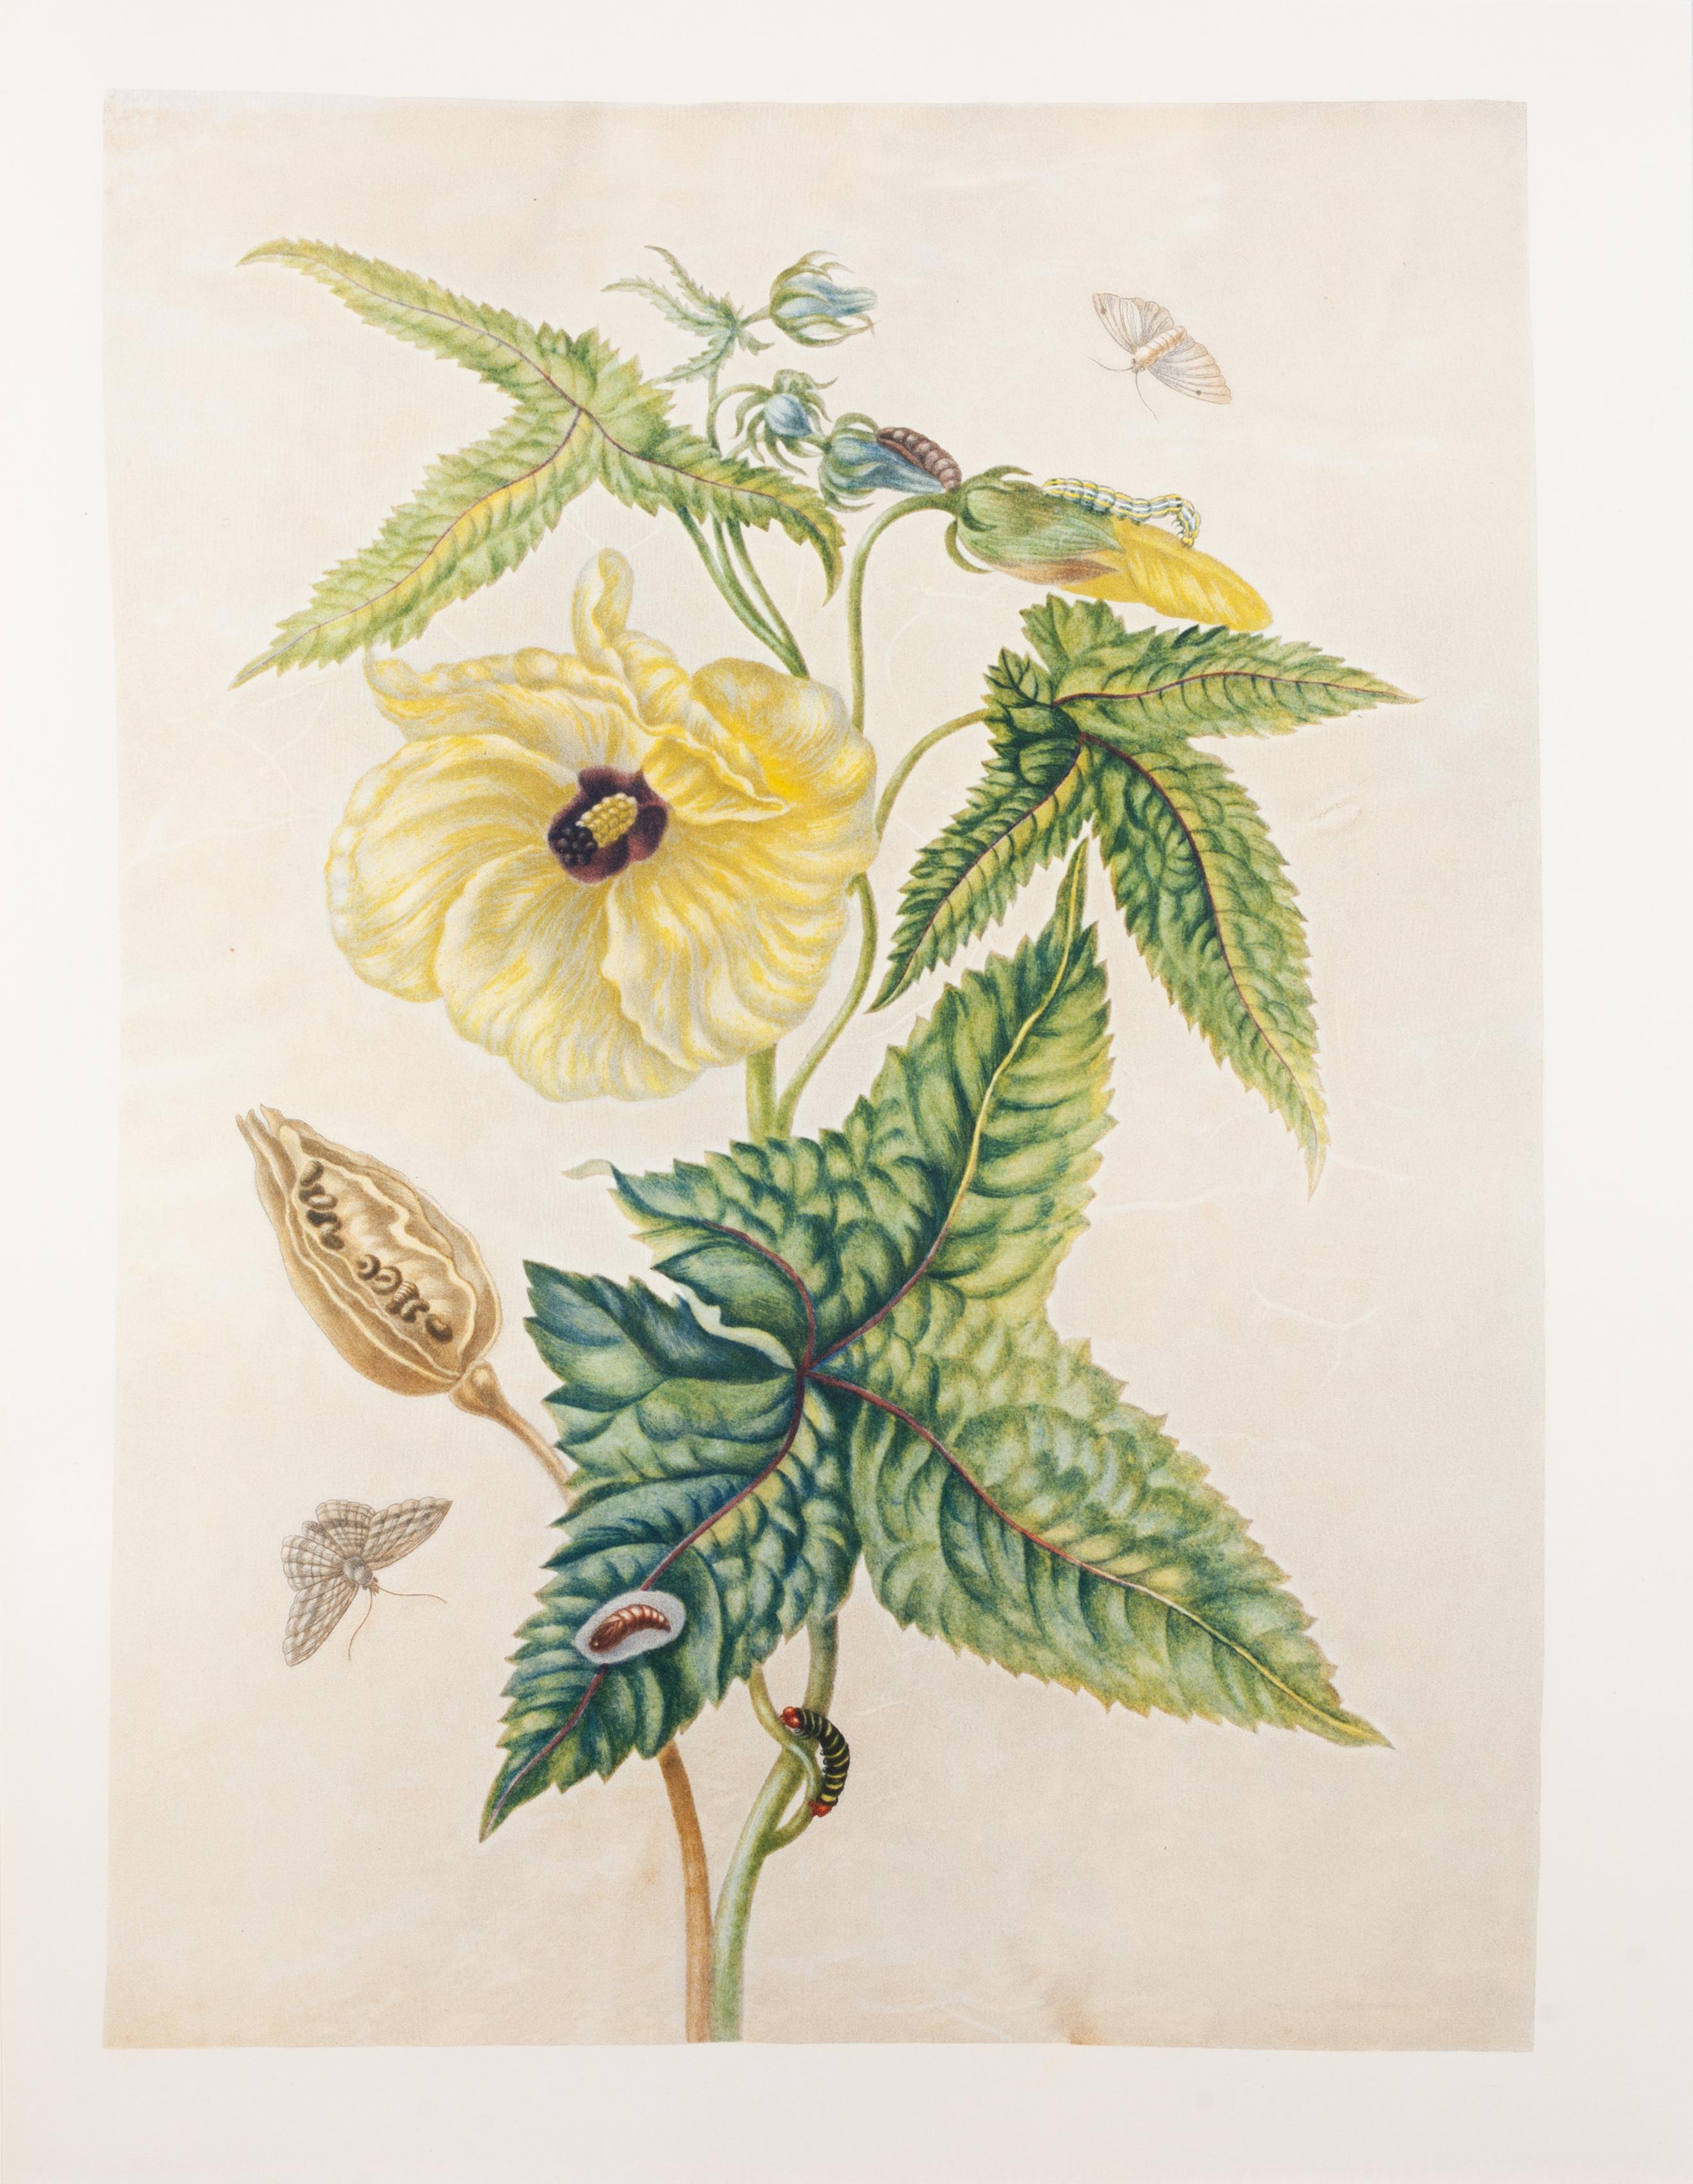 48. Hibiscus - Print by Maria Sybilla Merian